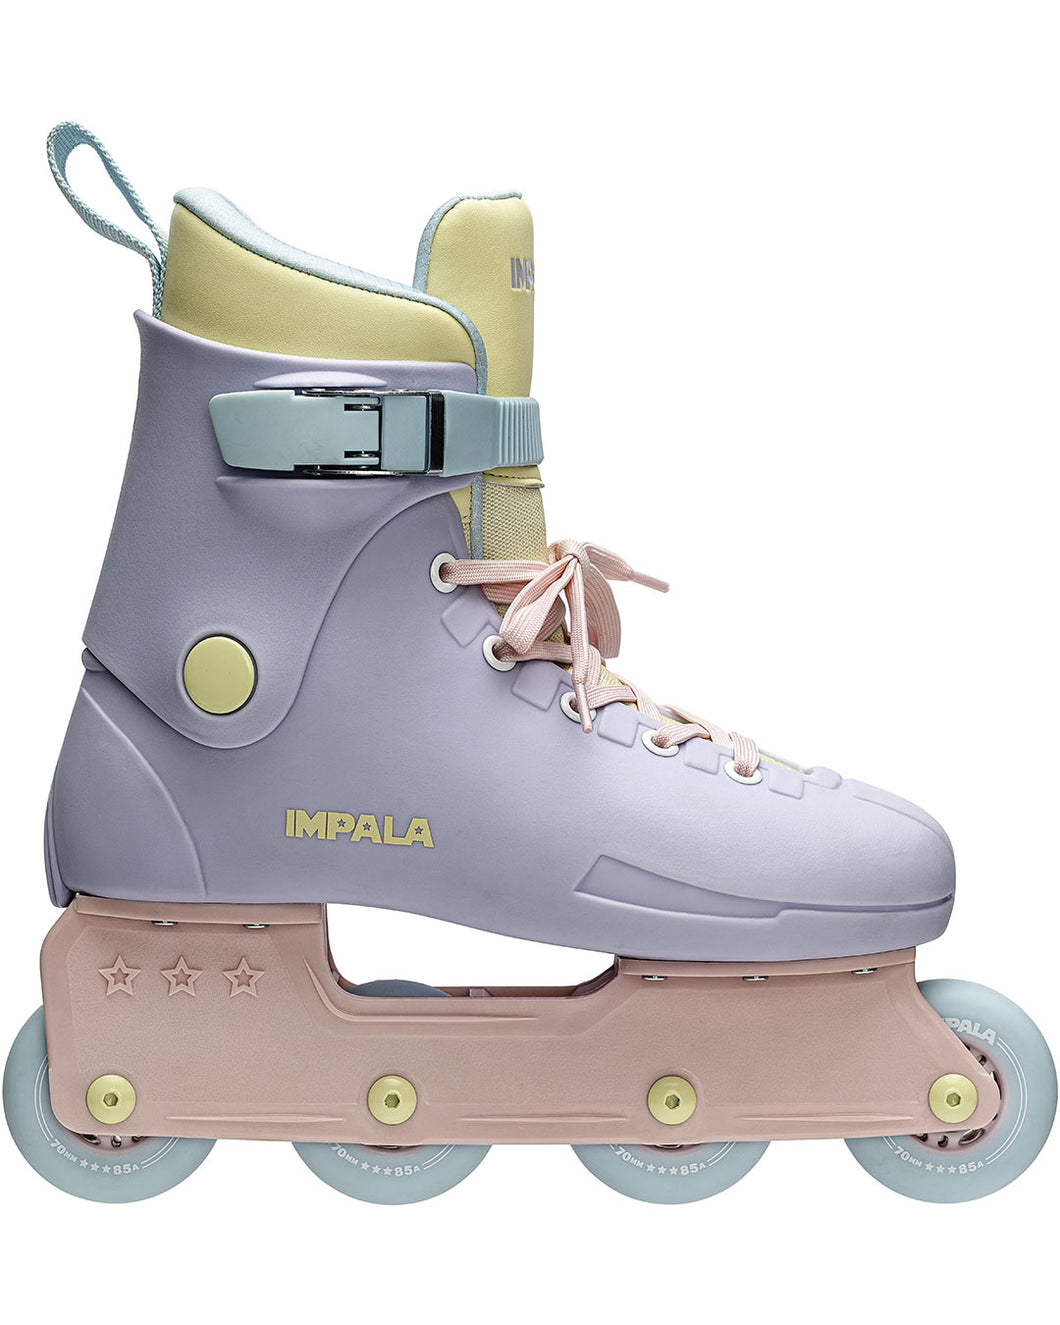 Impala - Lightspeed Inline Skates - Fairy Floss (Size 38/39EU)